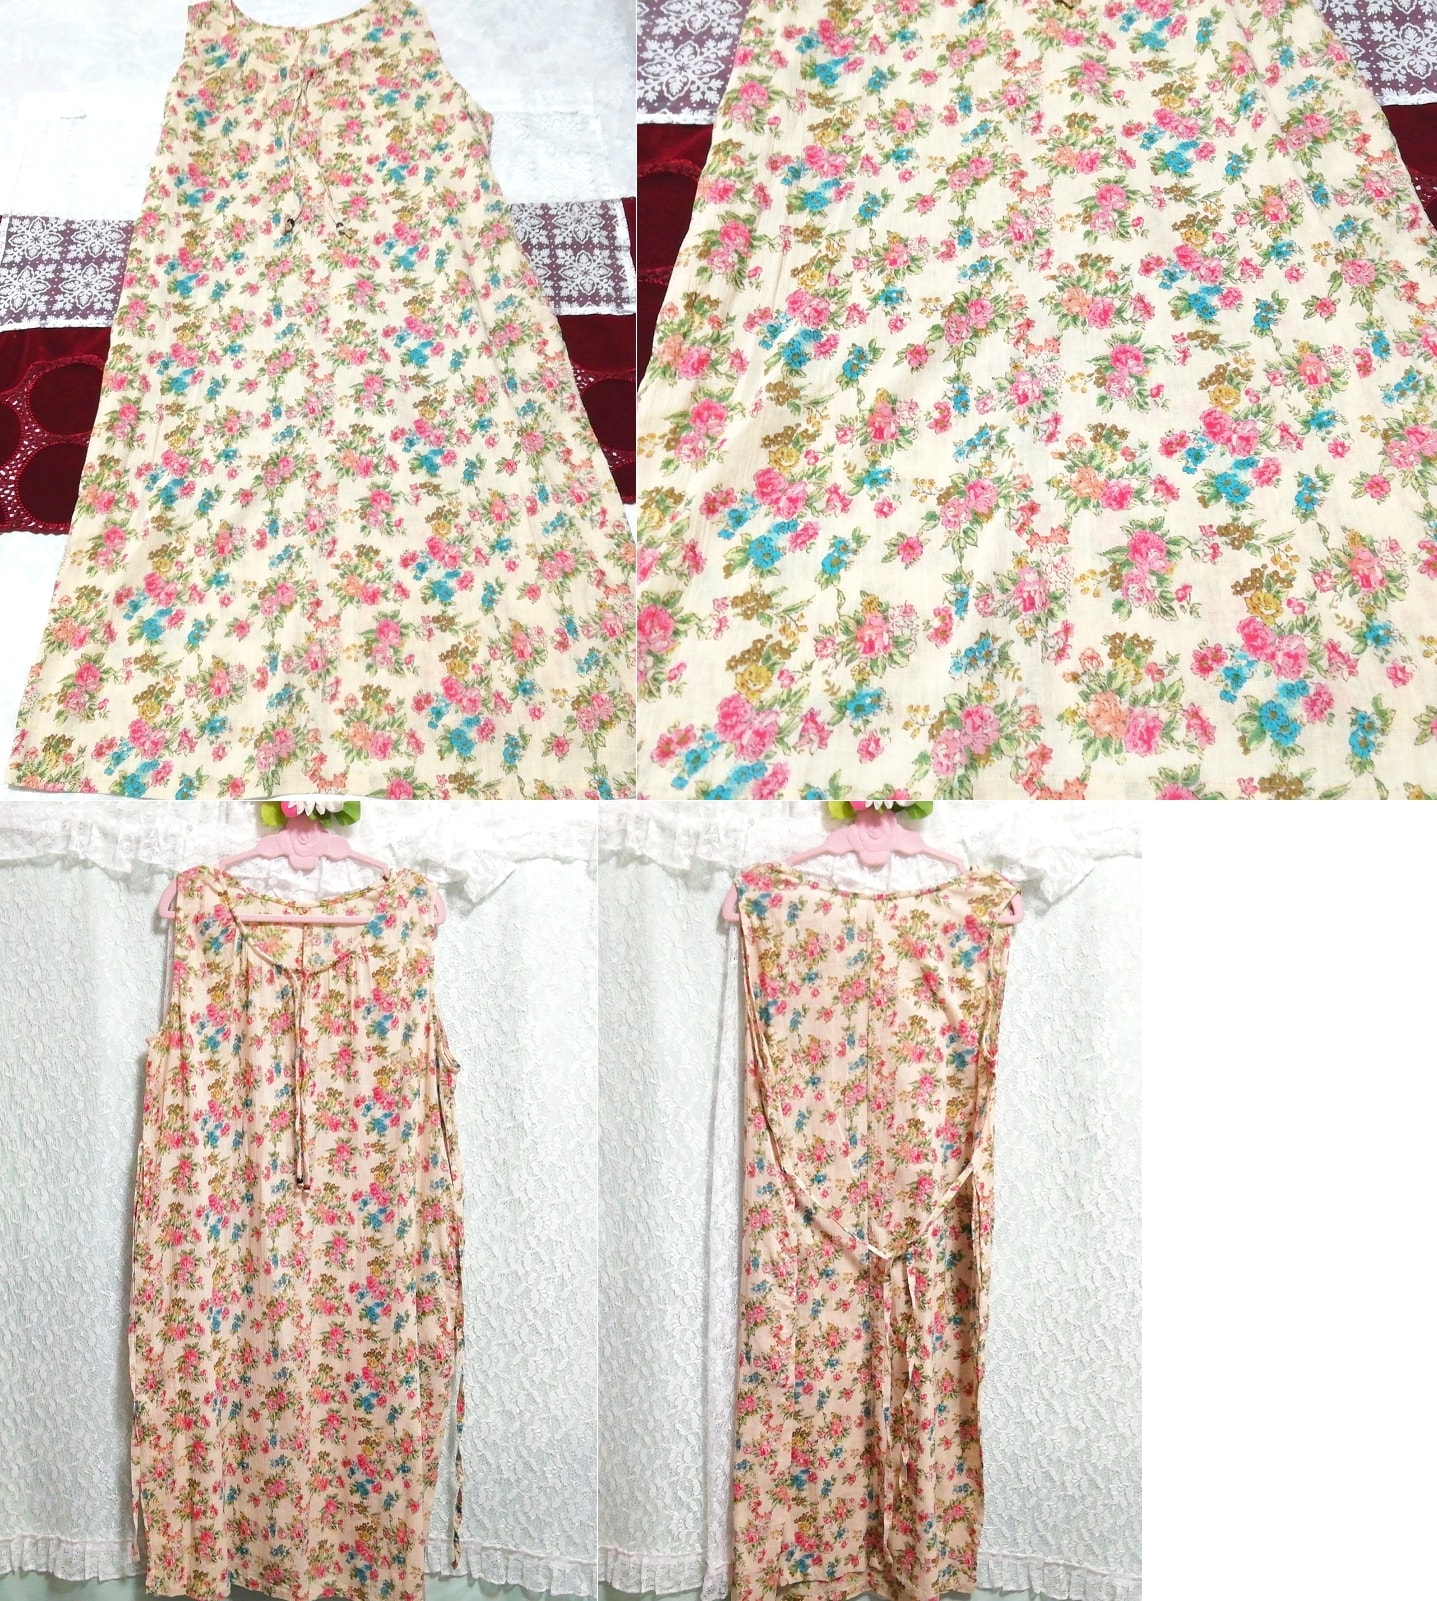 Flaxen floral print sleeveless cotton negligee nightgown nightwear maxi dress, long skirt, m size